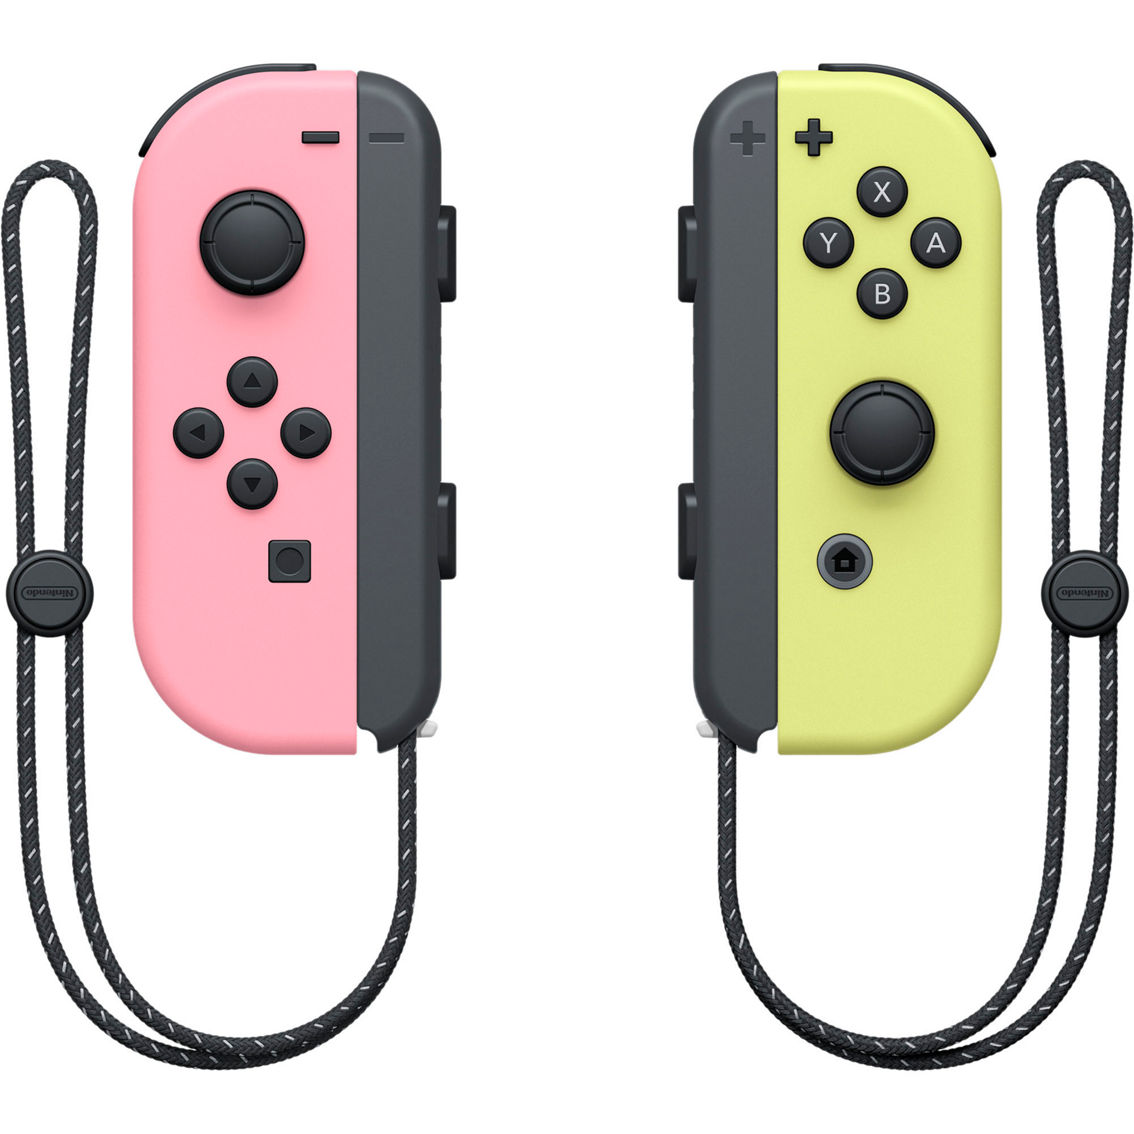 Nintendo Switch Pastel Pink and Pastel Yellow Joy Con - Image 2 of 2